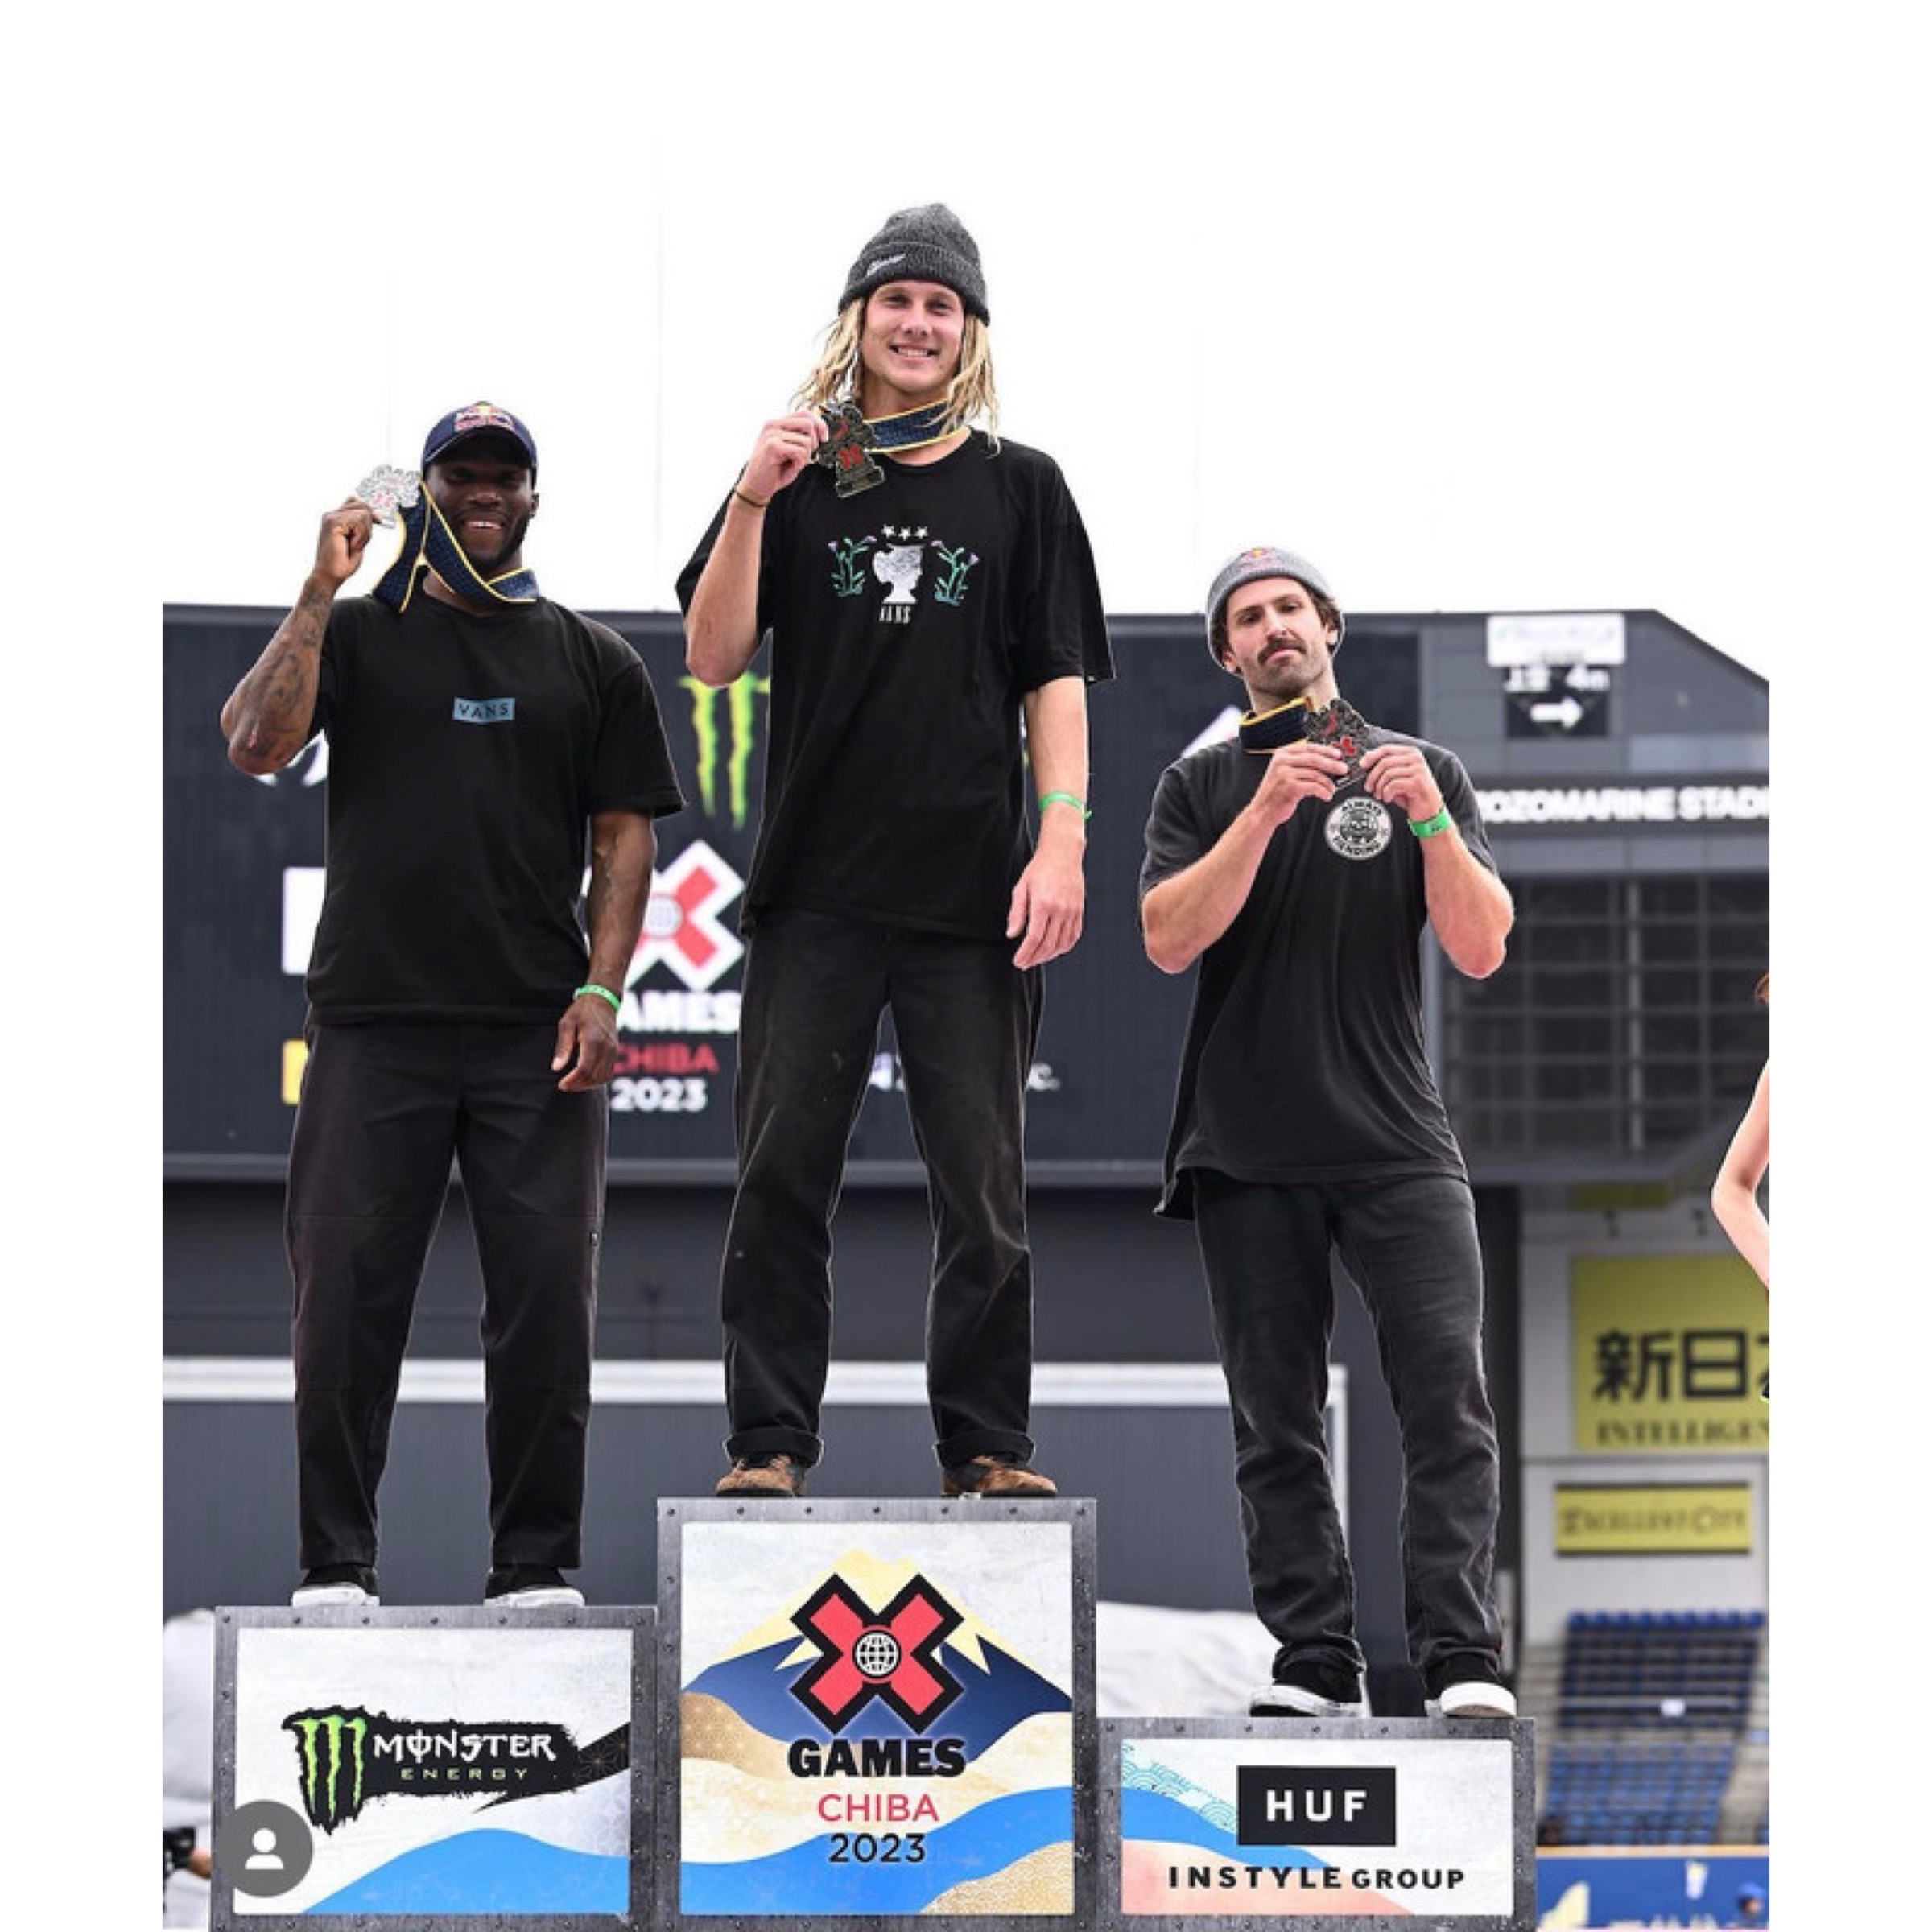 Boyd Hilder wins Gold in X-Games Men's Street BMX Comp - S1 